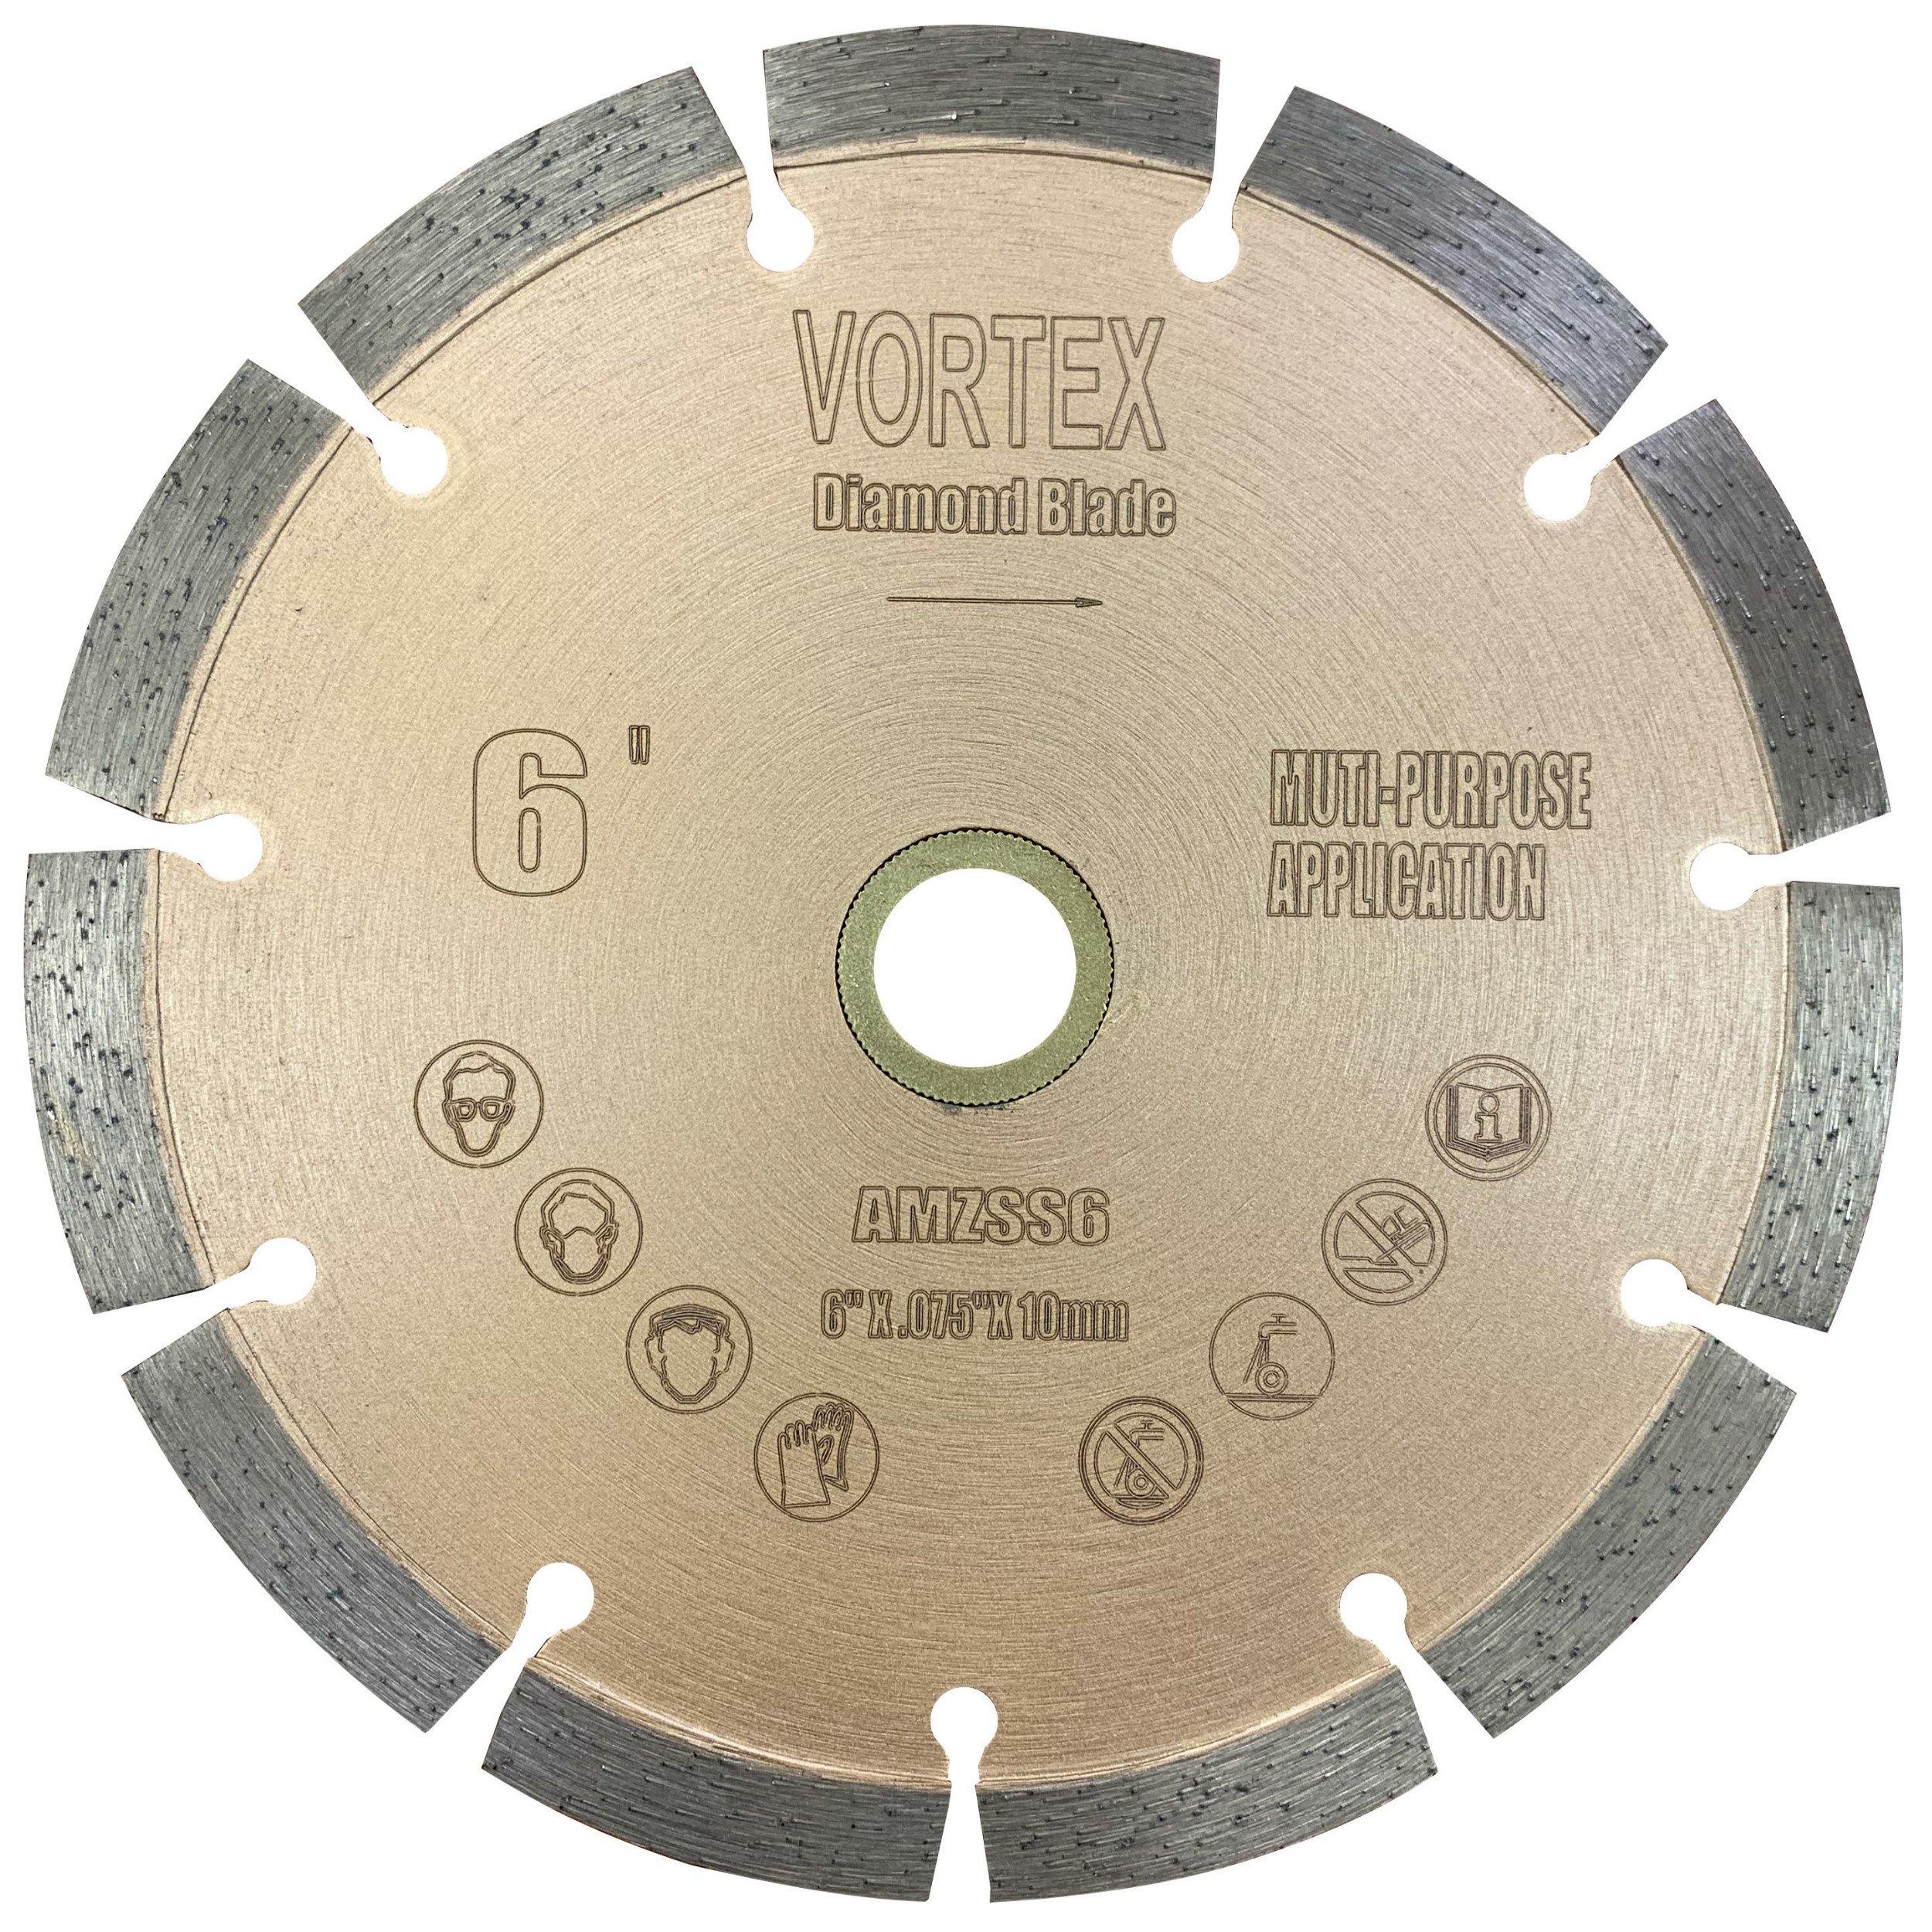 Vortex Diamond VSS Dry or Wet Cutting Segmented Diamond Saw Blades for Concrete Stone Brick Masonry - Vortex Diamond